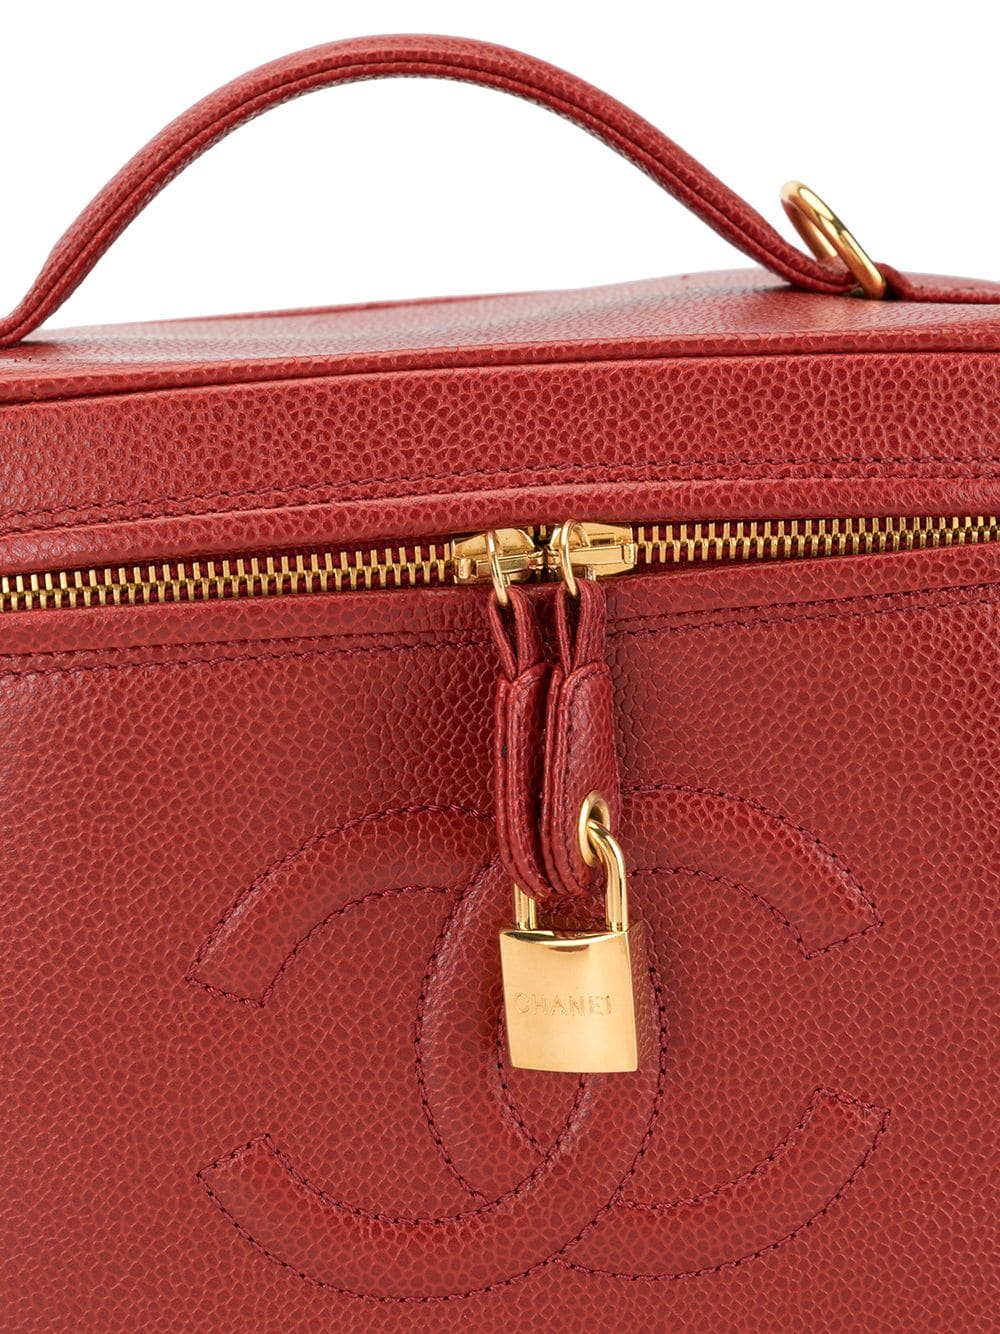 Chanel Red Vintage 90's CC Vanity Case Crossbody Bag